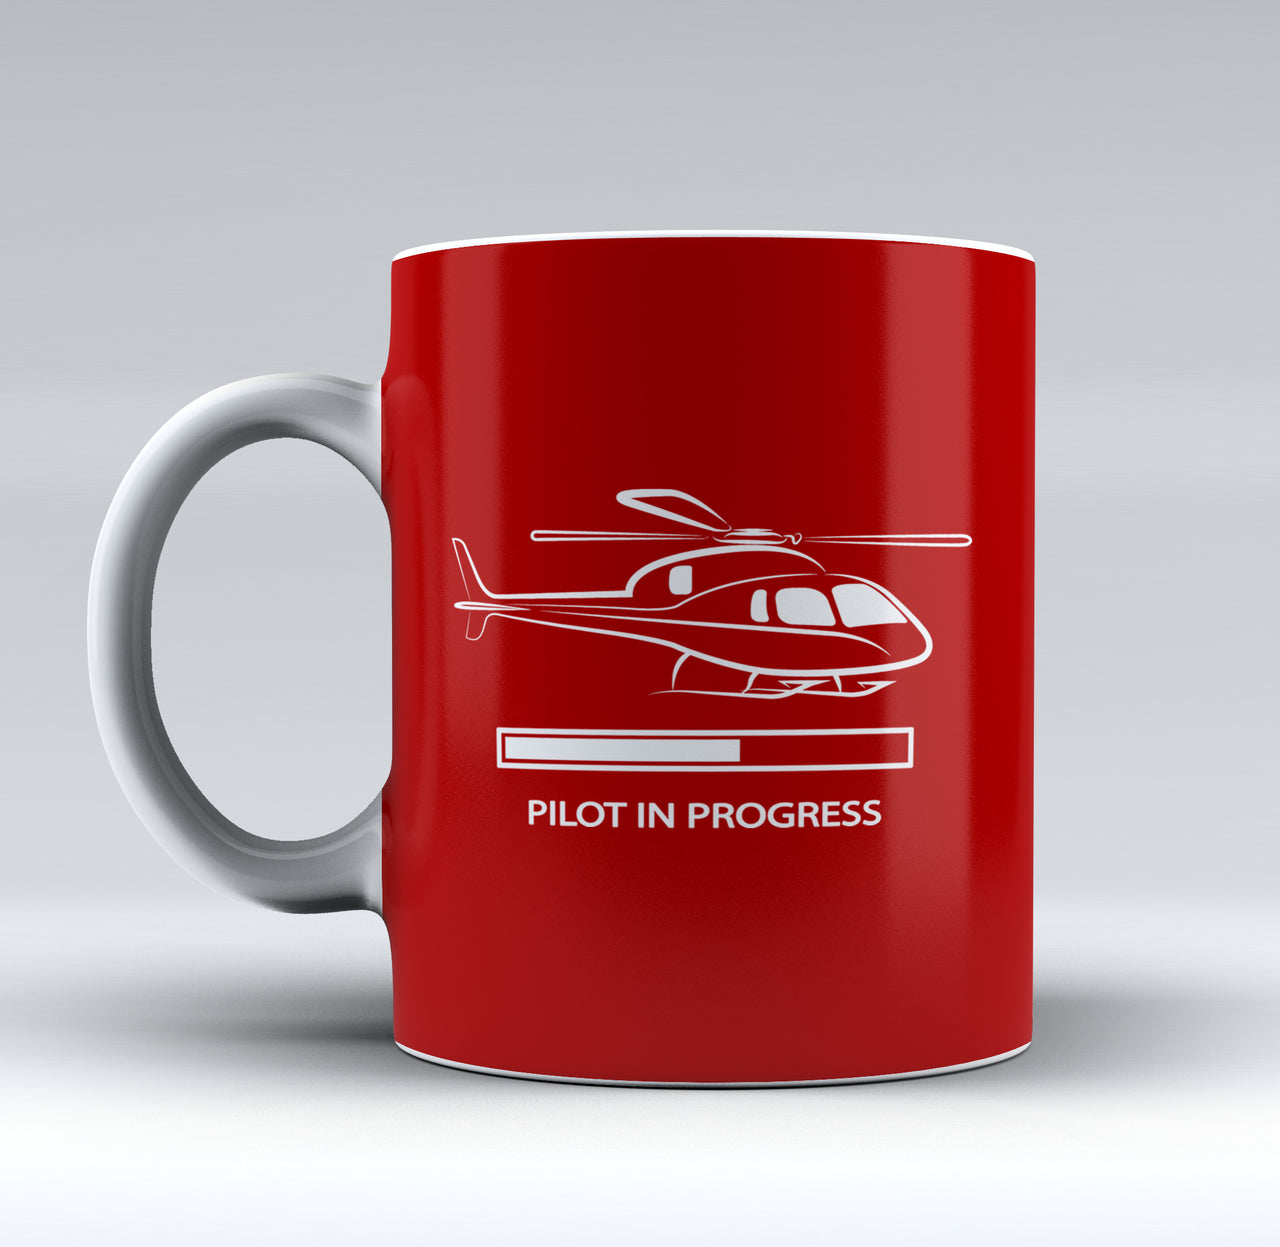 Pilot In Progress (Helicopter) Designed Mugs